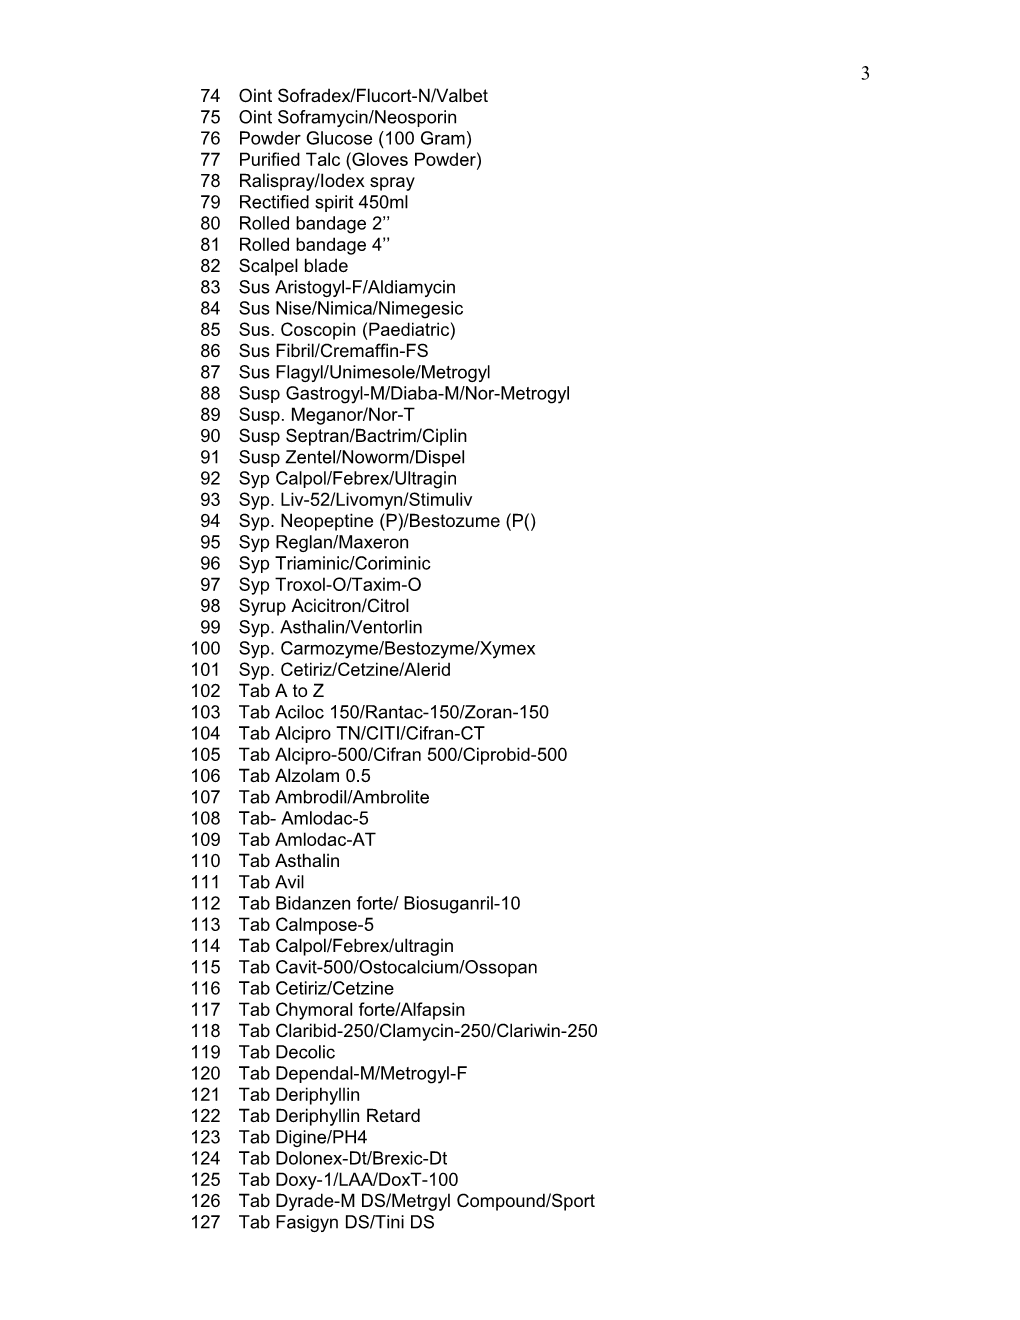 List of Hospital Items